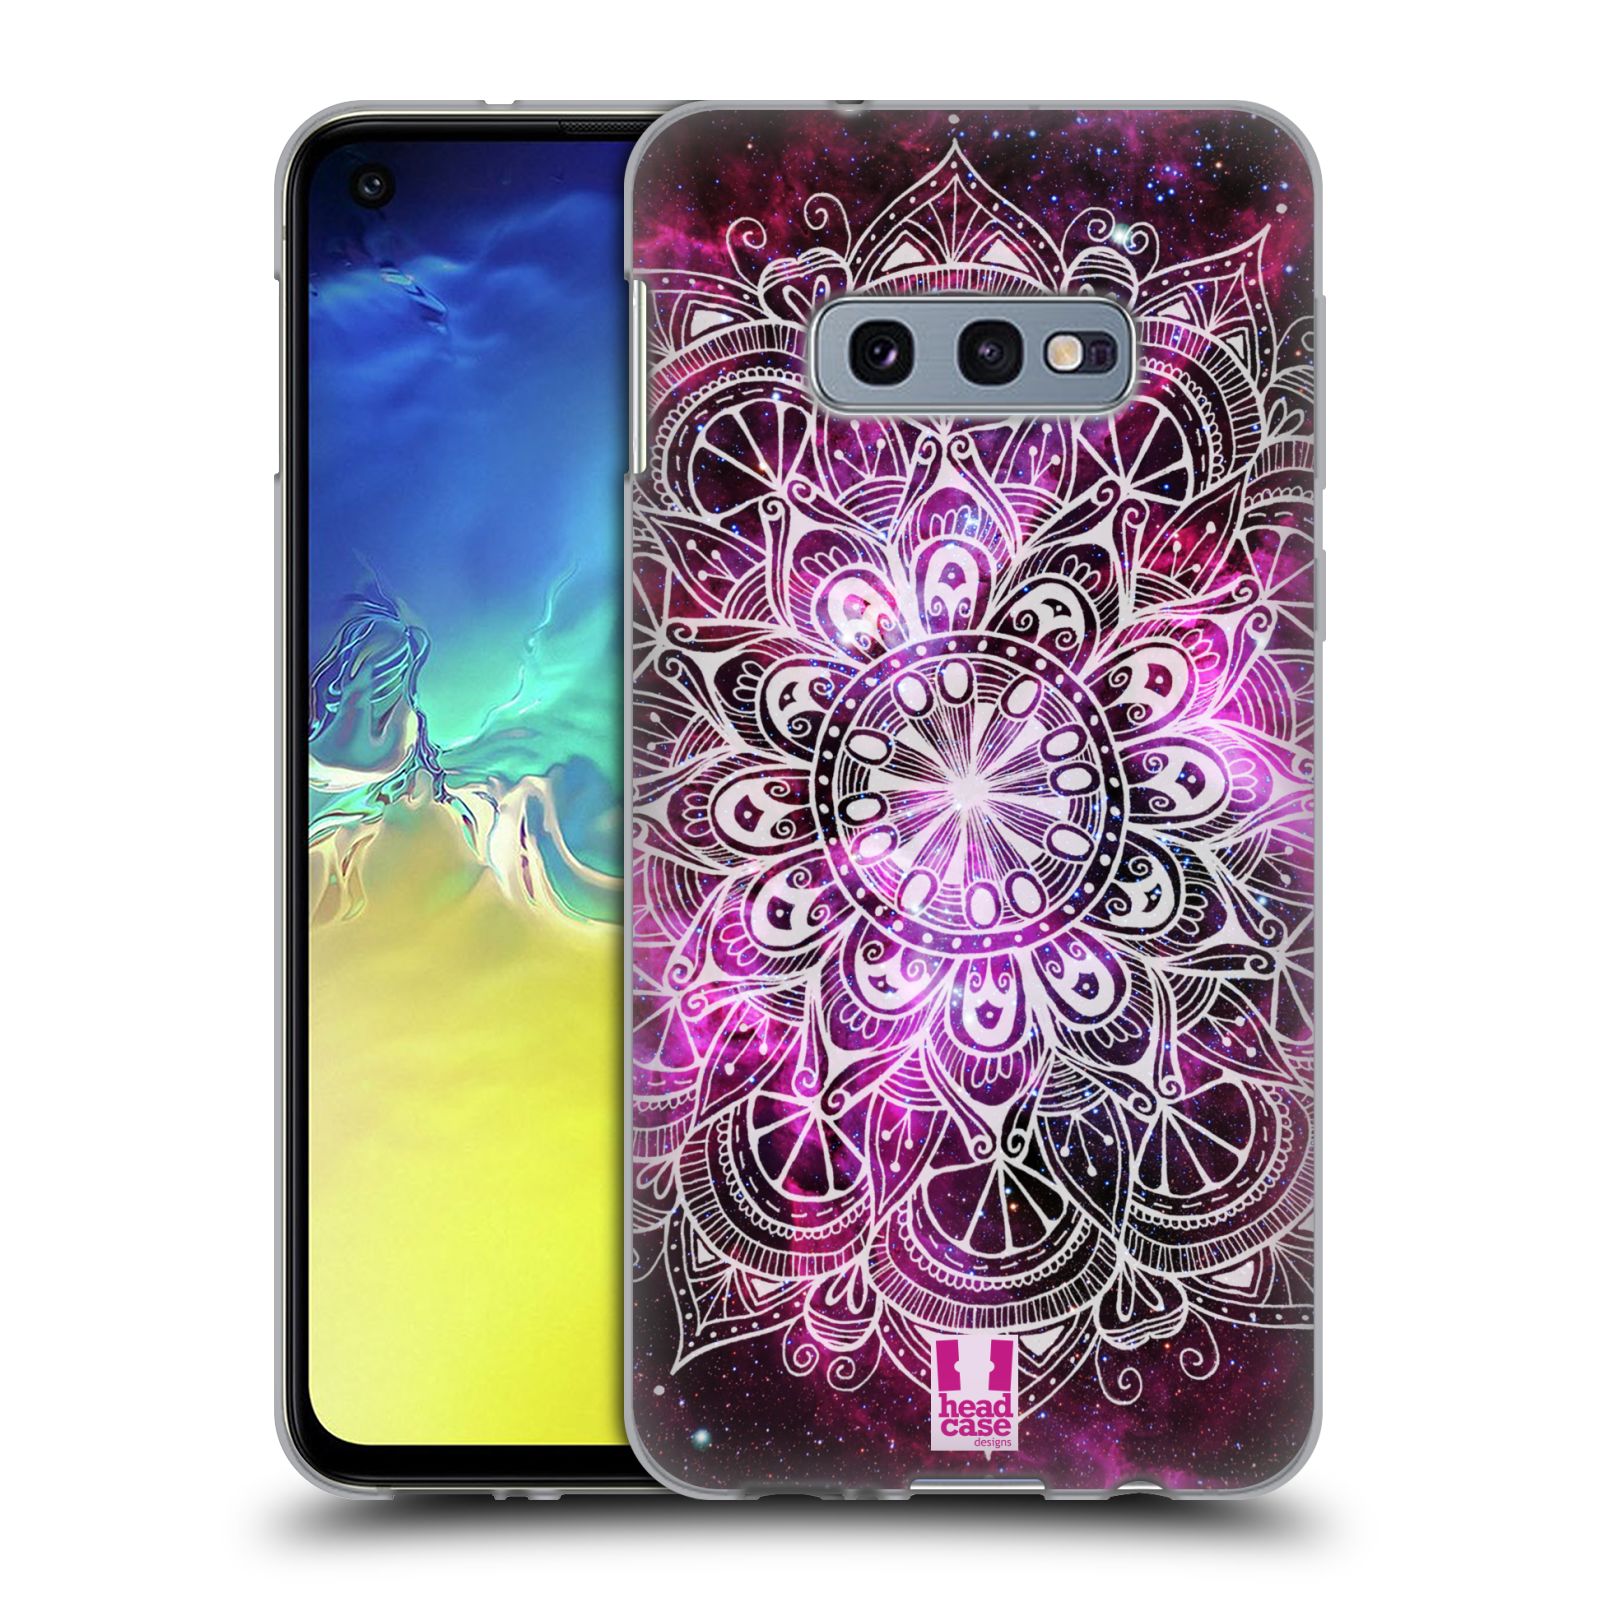 Silikonové pouzdro na mobil Samsung Galaxy S10e - Head Case - Mandala Doodle Nebula (Silikonový kryt, obal, pouzdro na mobilní telefon Samsung Galaxy S10e SM-G970 s motivem Mandala Doodle Nebula)